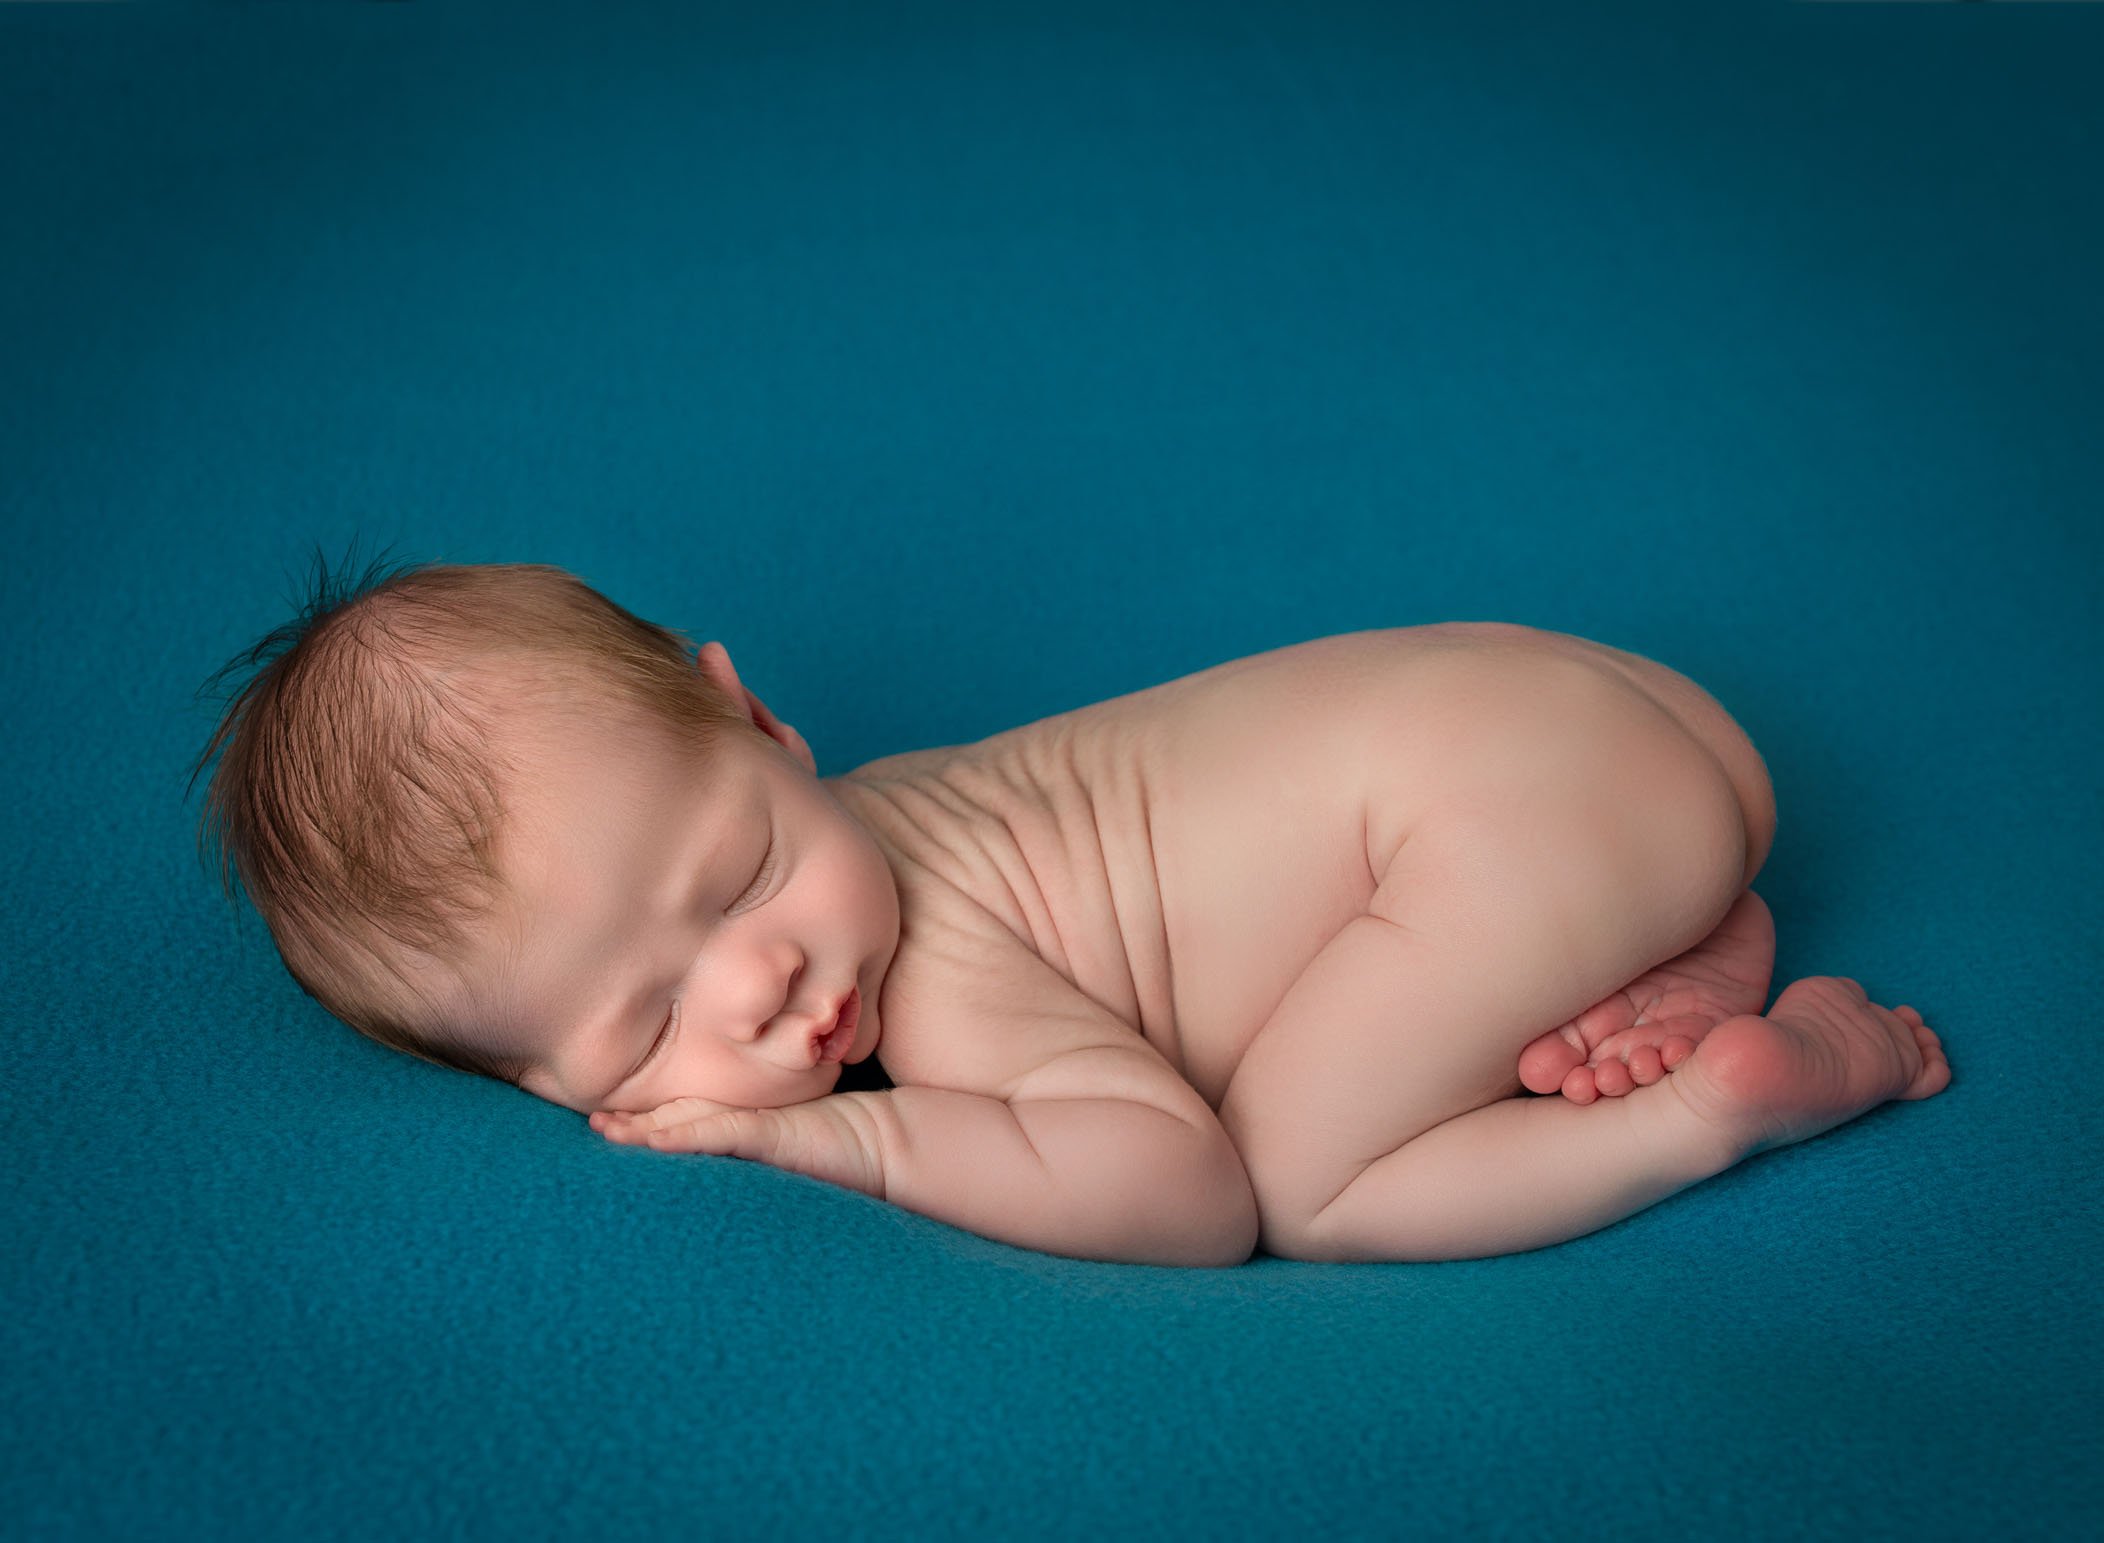 newborn baby boy sleeping in bum up position on teal blanket